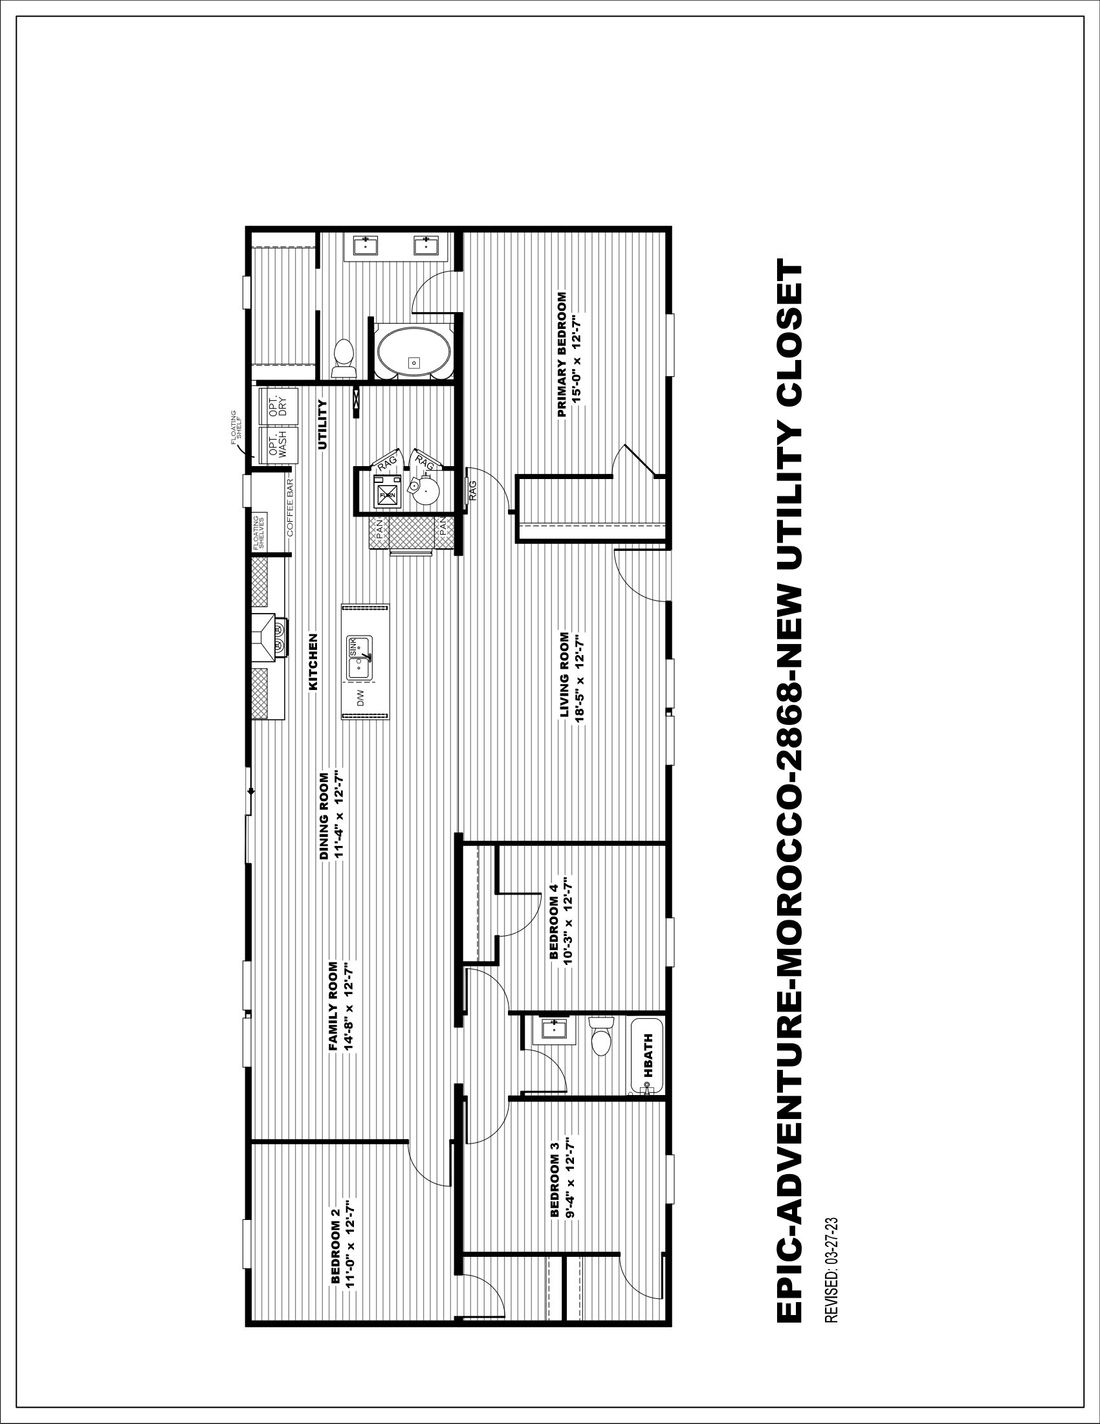 The MOROCCO 6828-2301 Floor Plan